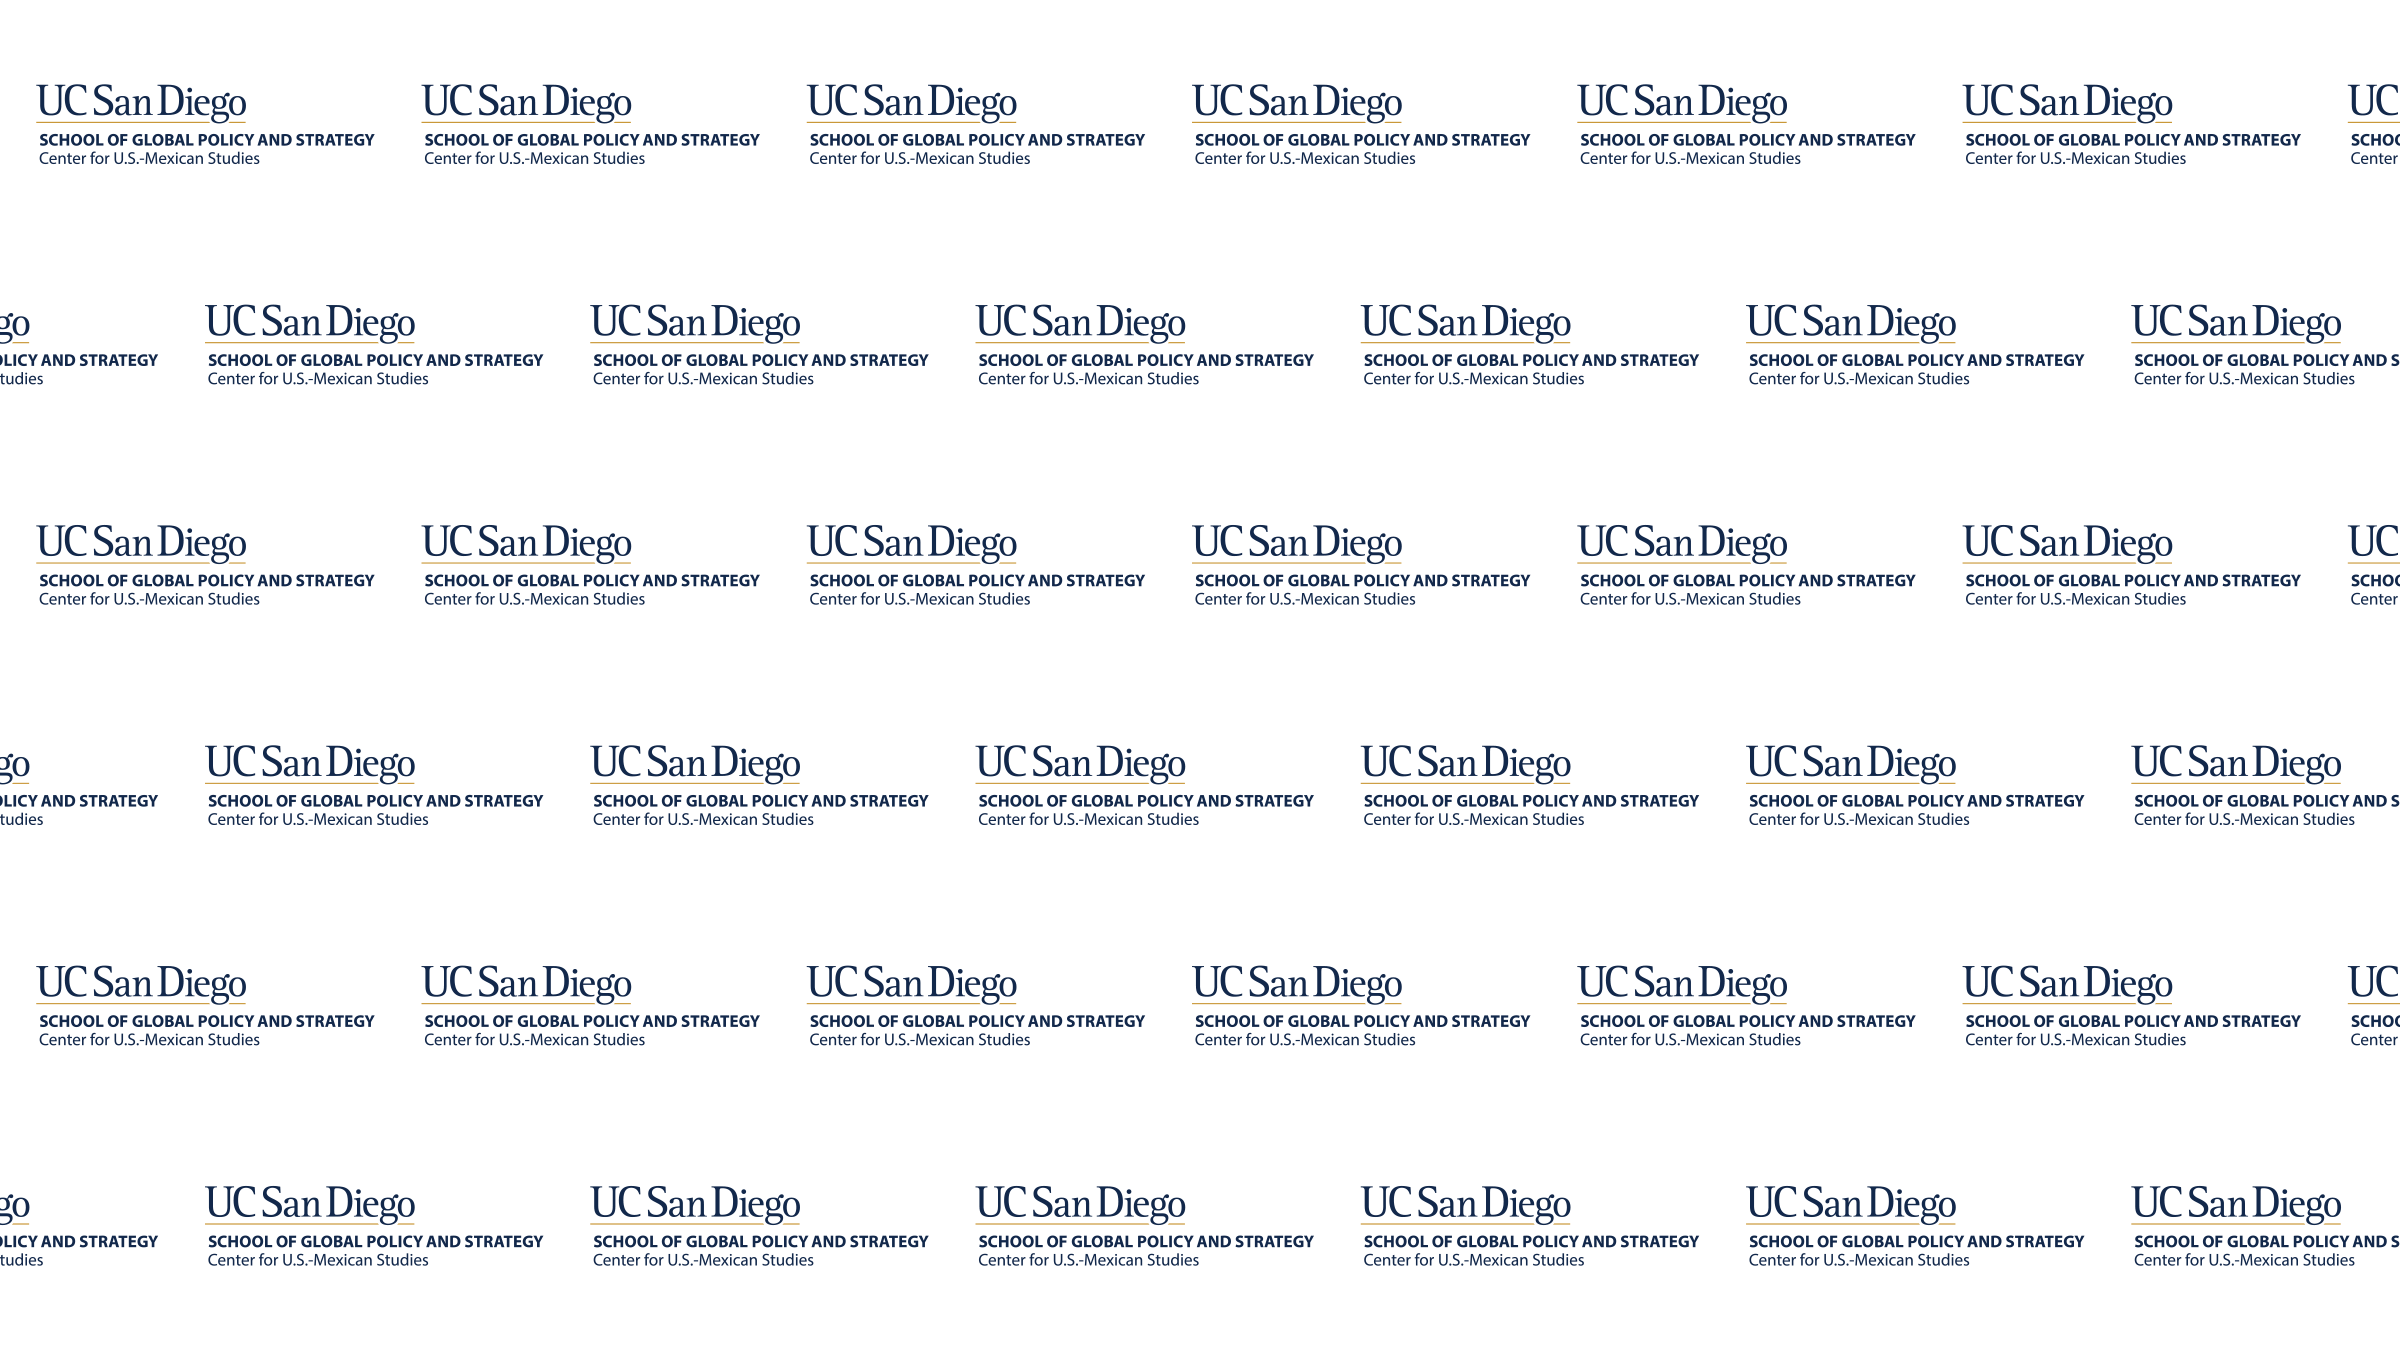 usmex-ucsd-backdrop_white-bg_color-logo.png